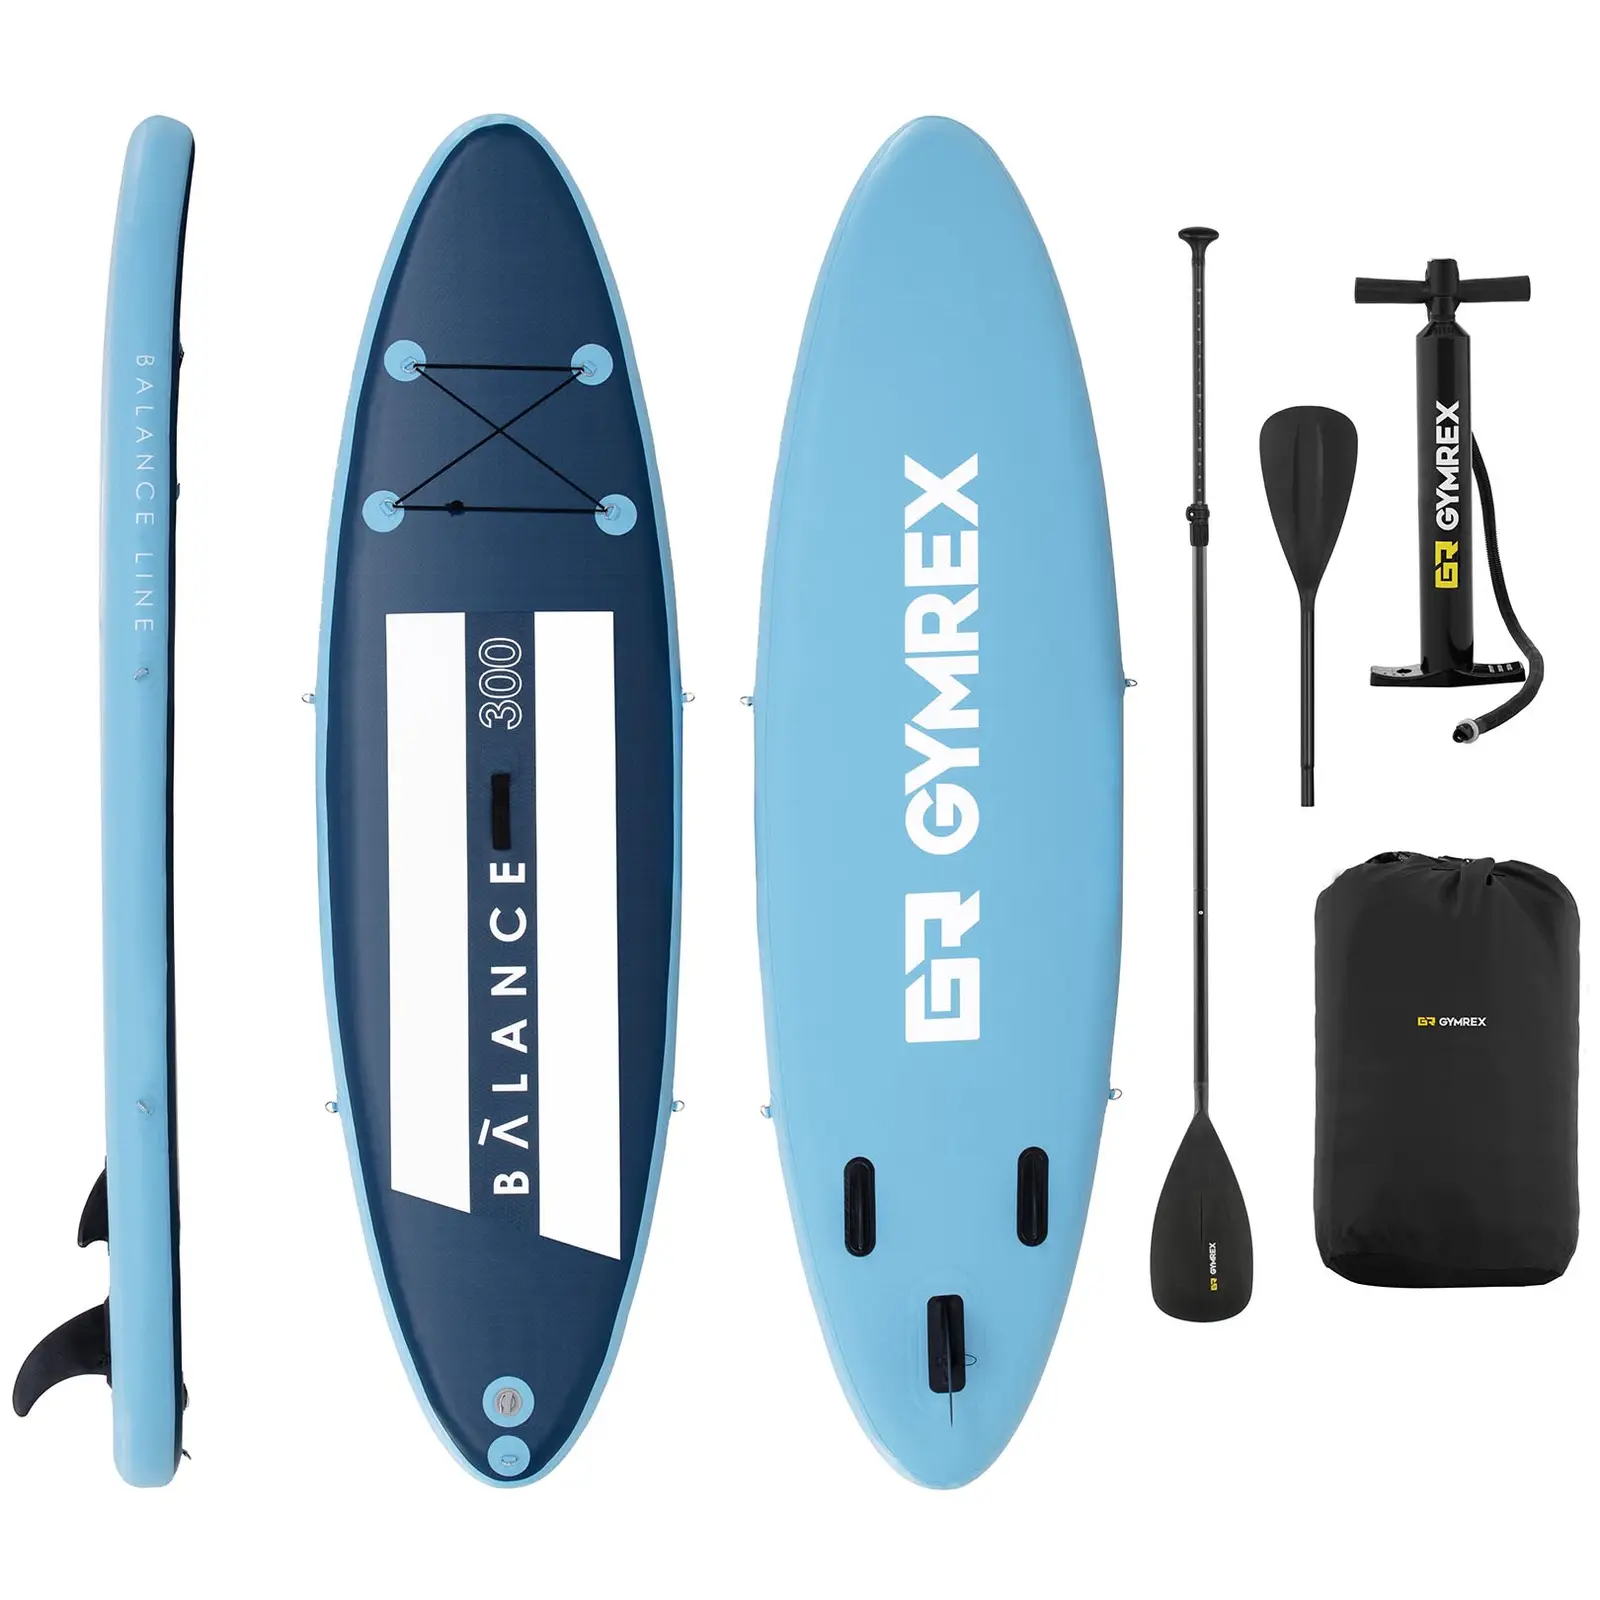 Inflatable SUP-bord - 135 kg - blauw / marineblauw - set met peddel en accessoires